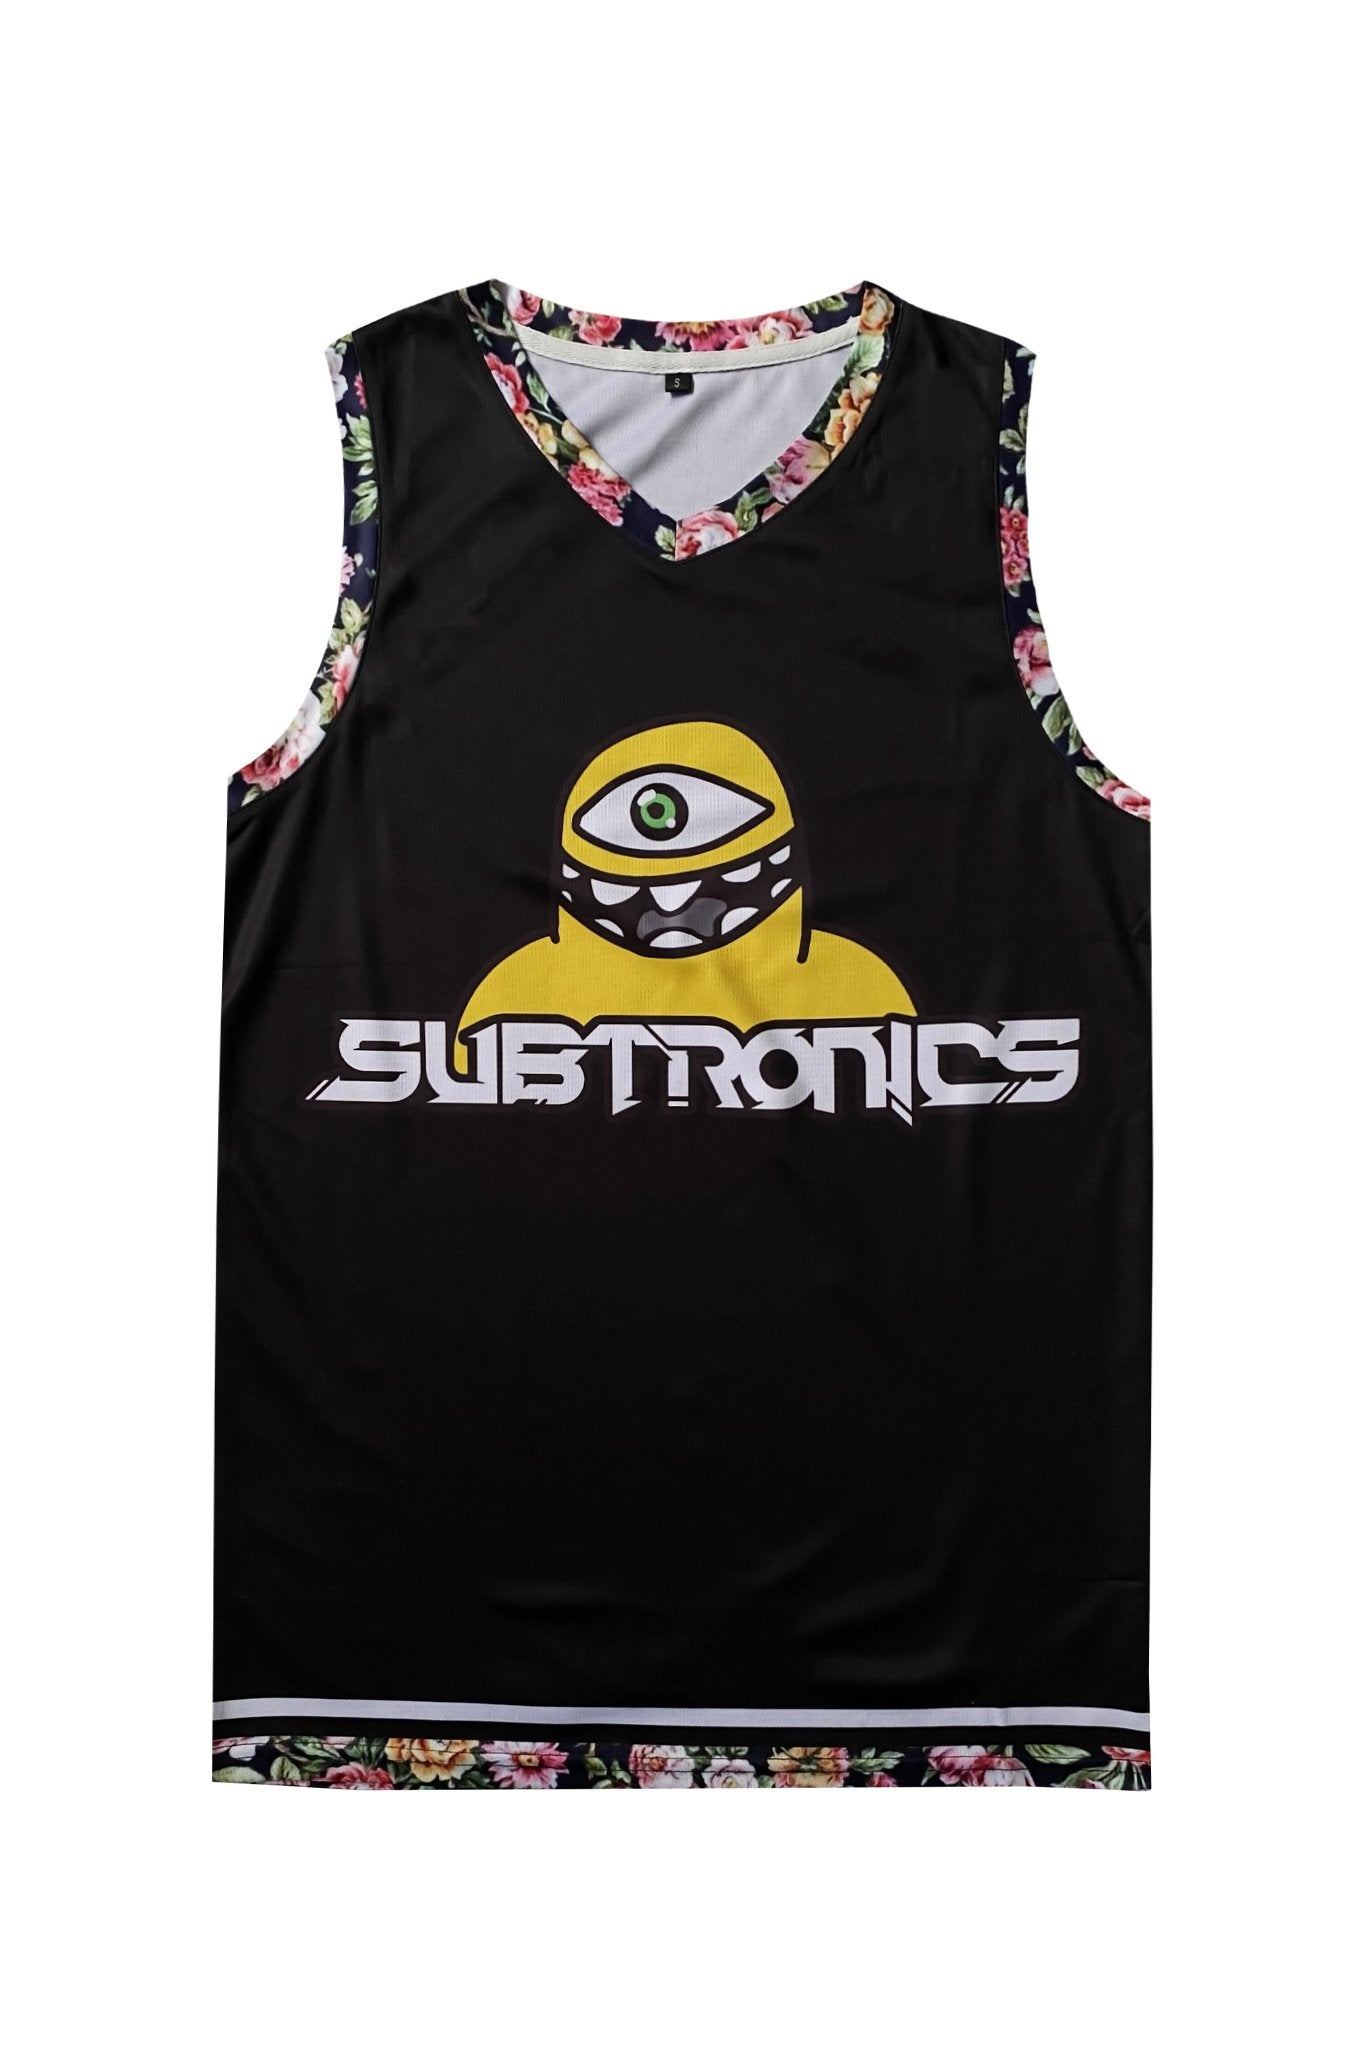 Subtronics - Cyclops Army - Basketball Jersey